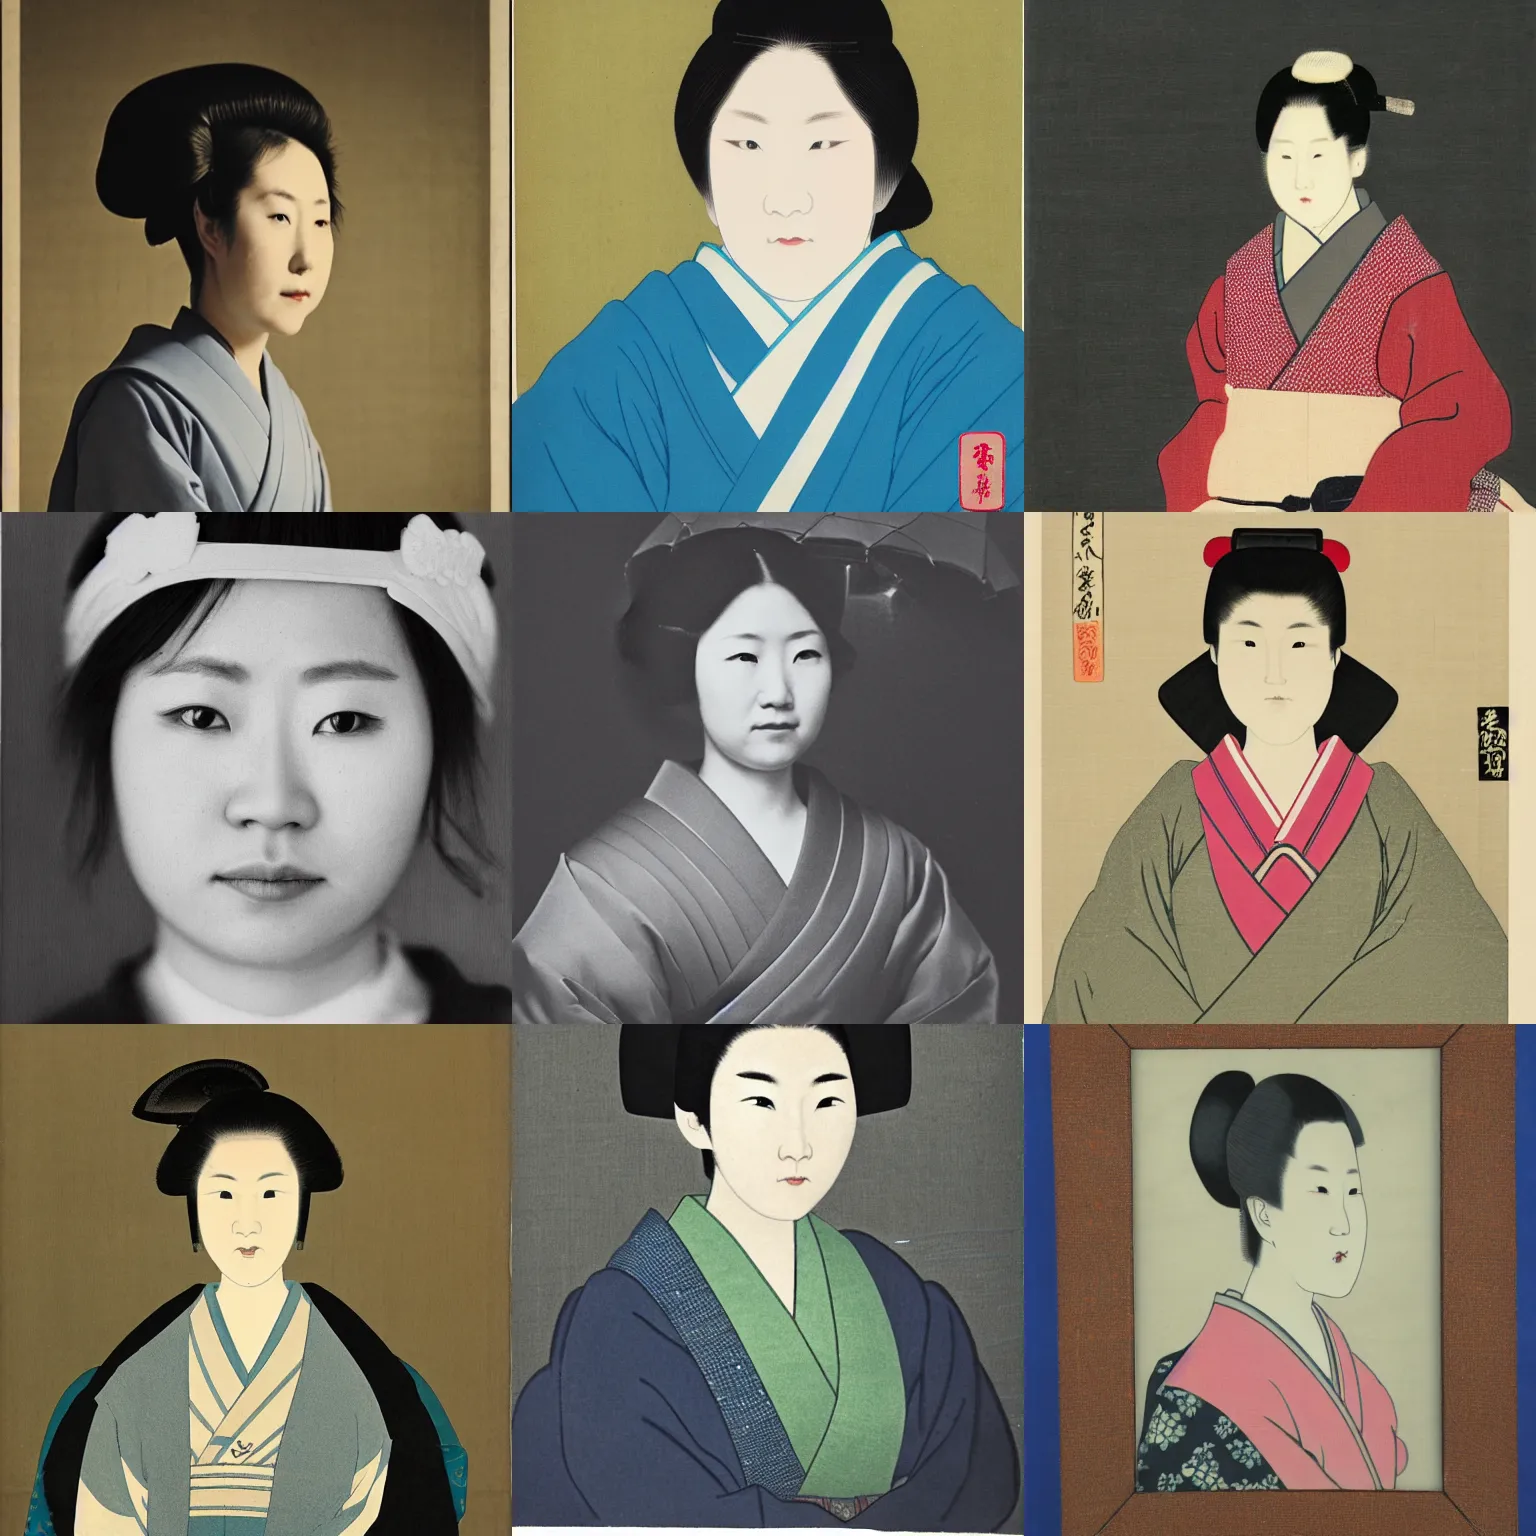 Prompt: portrait of japanese woman